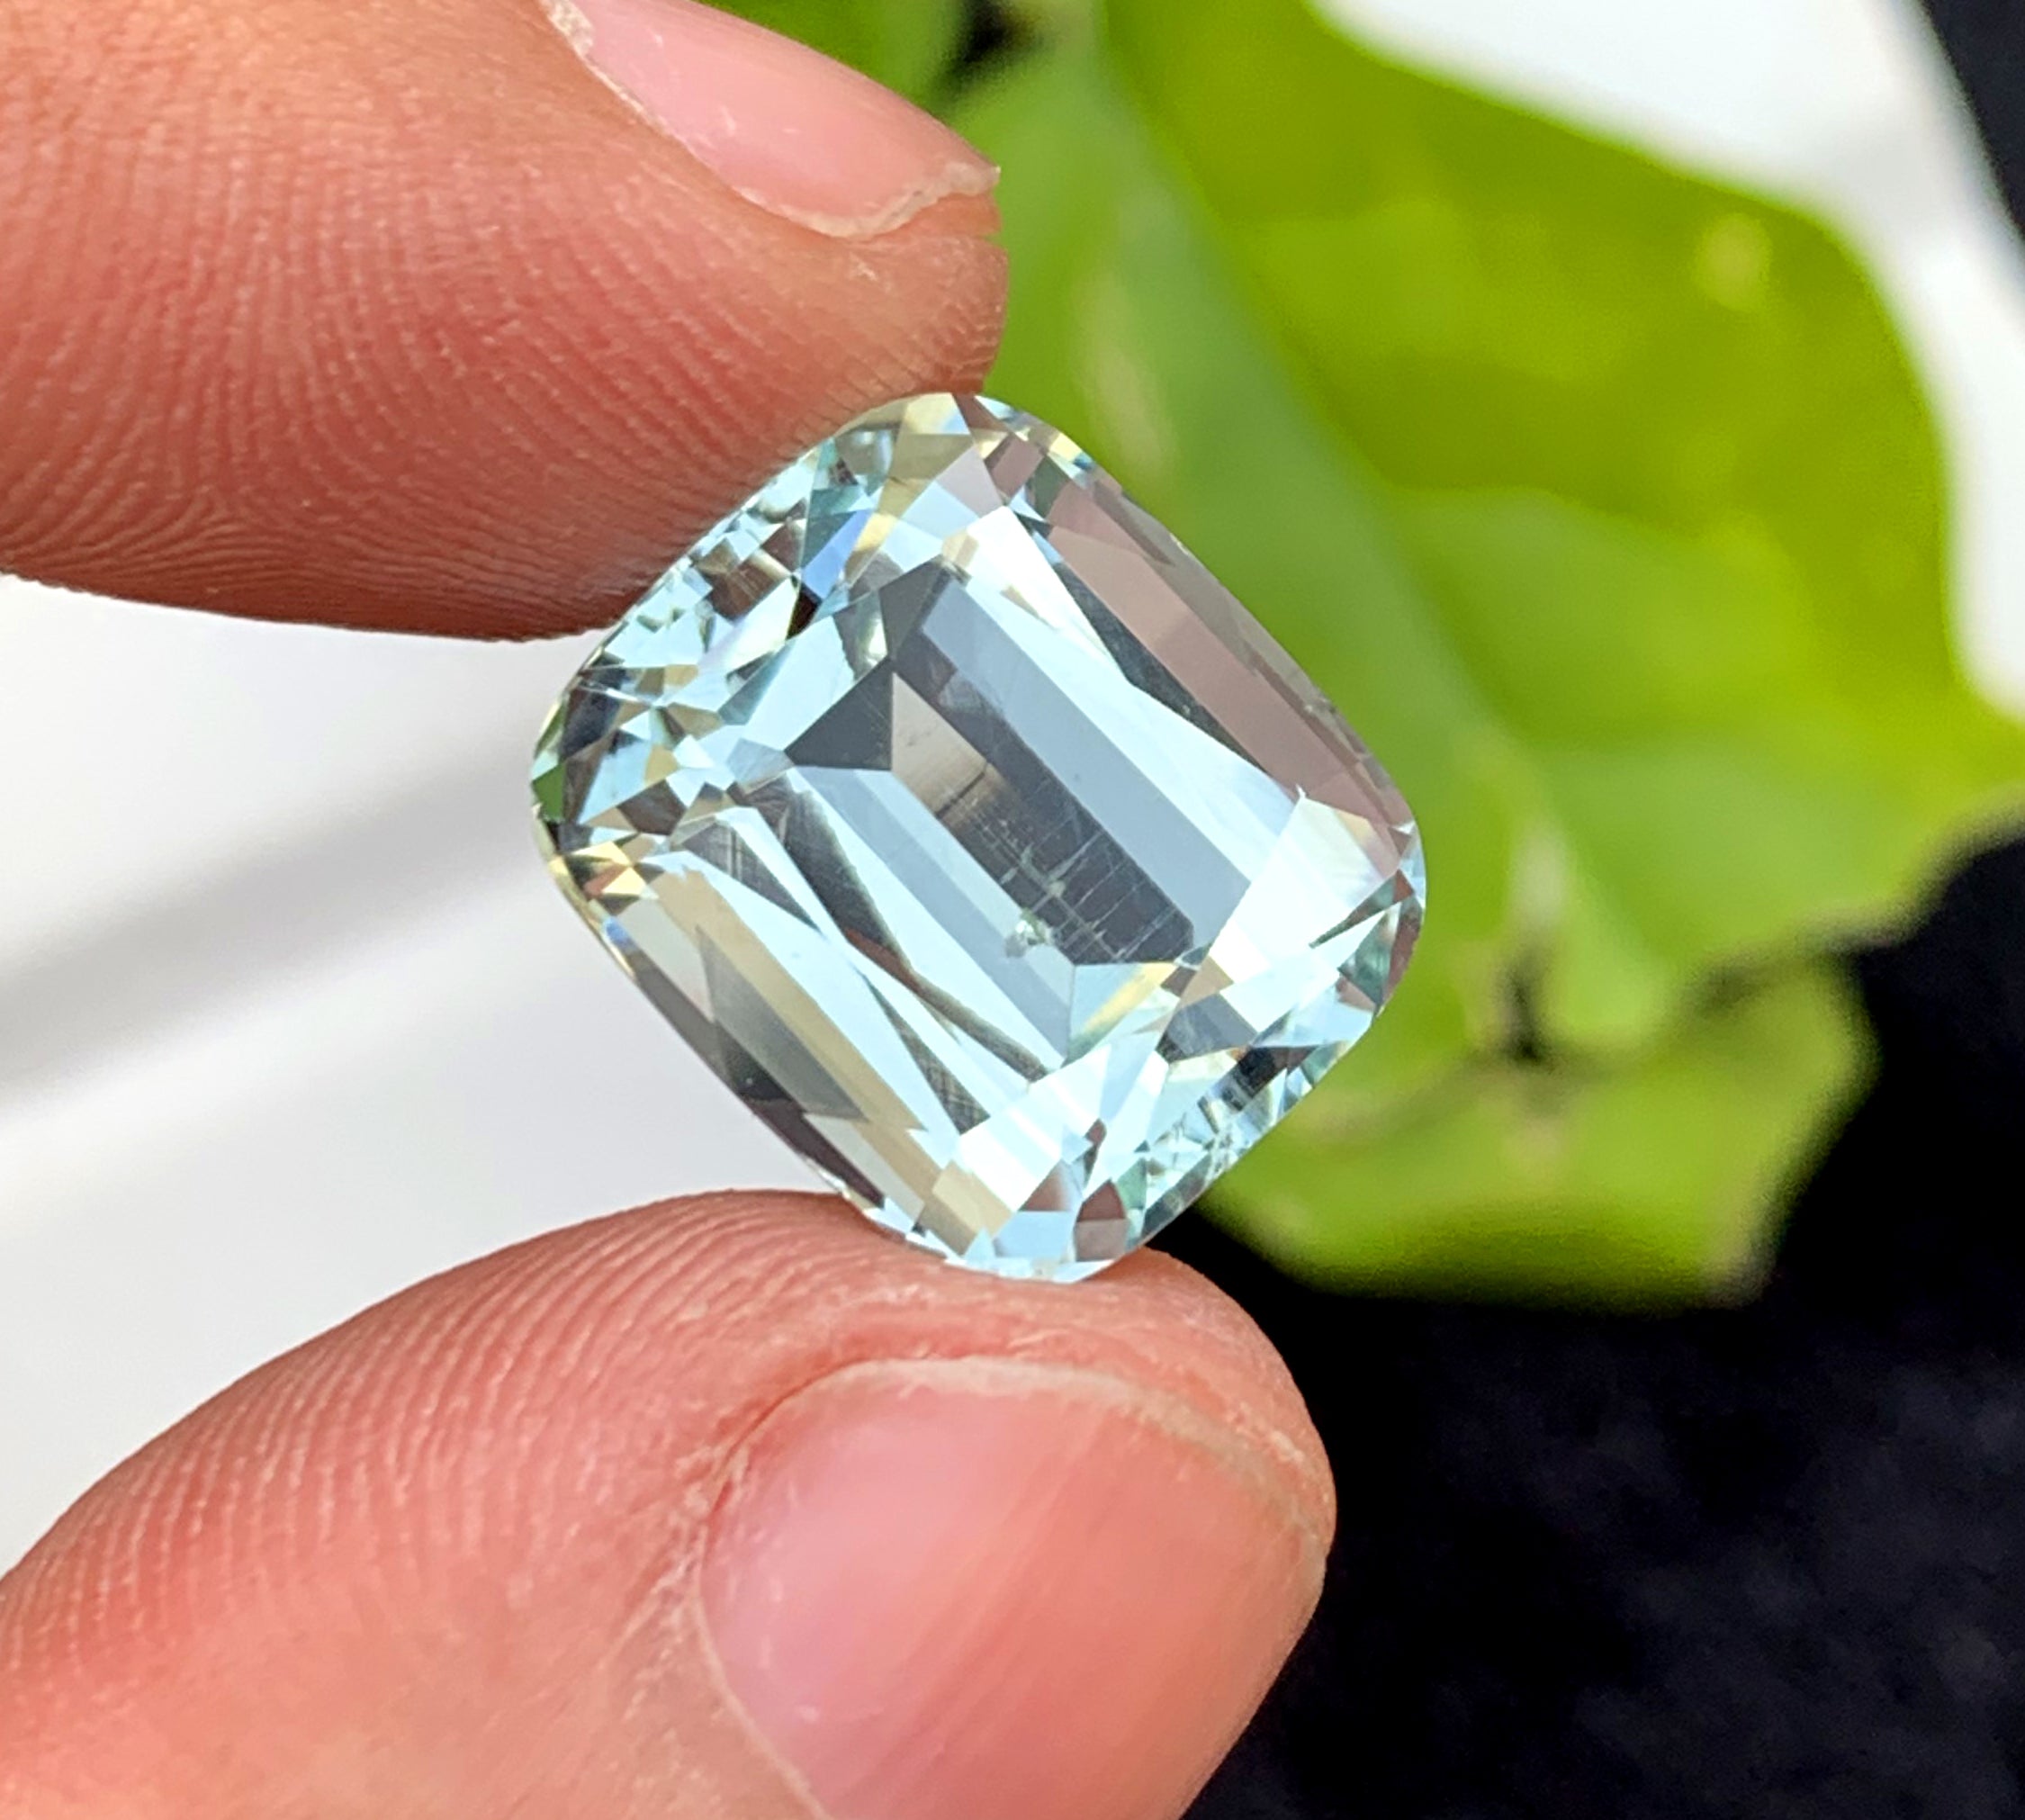 Cusshion Cut Natural Aquamarne Gemstone, Loose Gemstone, Aqua Faceted Cut Stone, Gemstone Jewelry - 11.65 CT